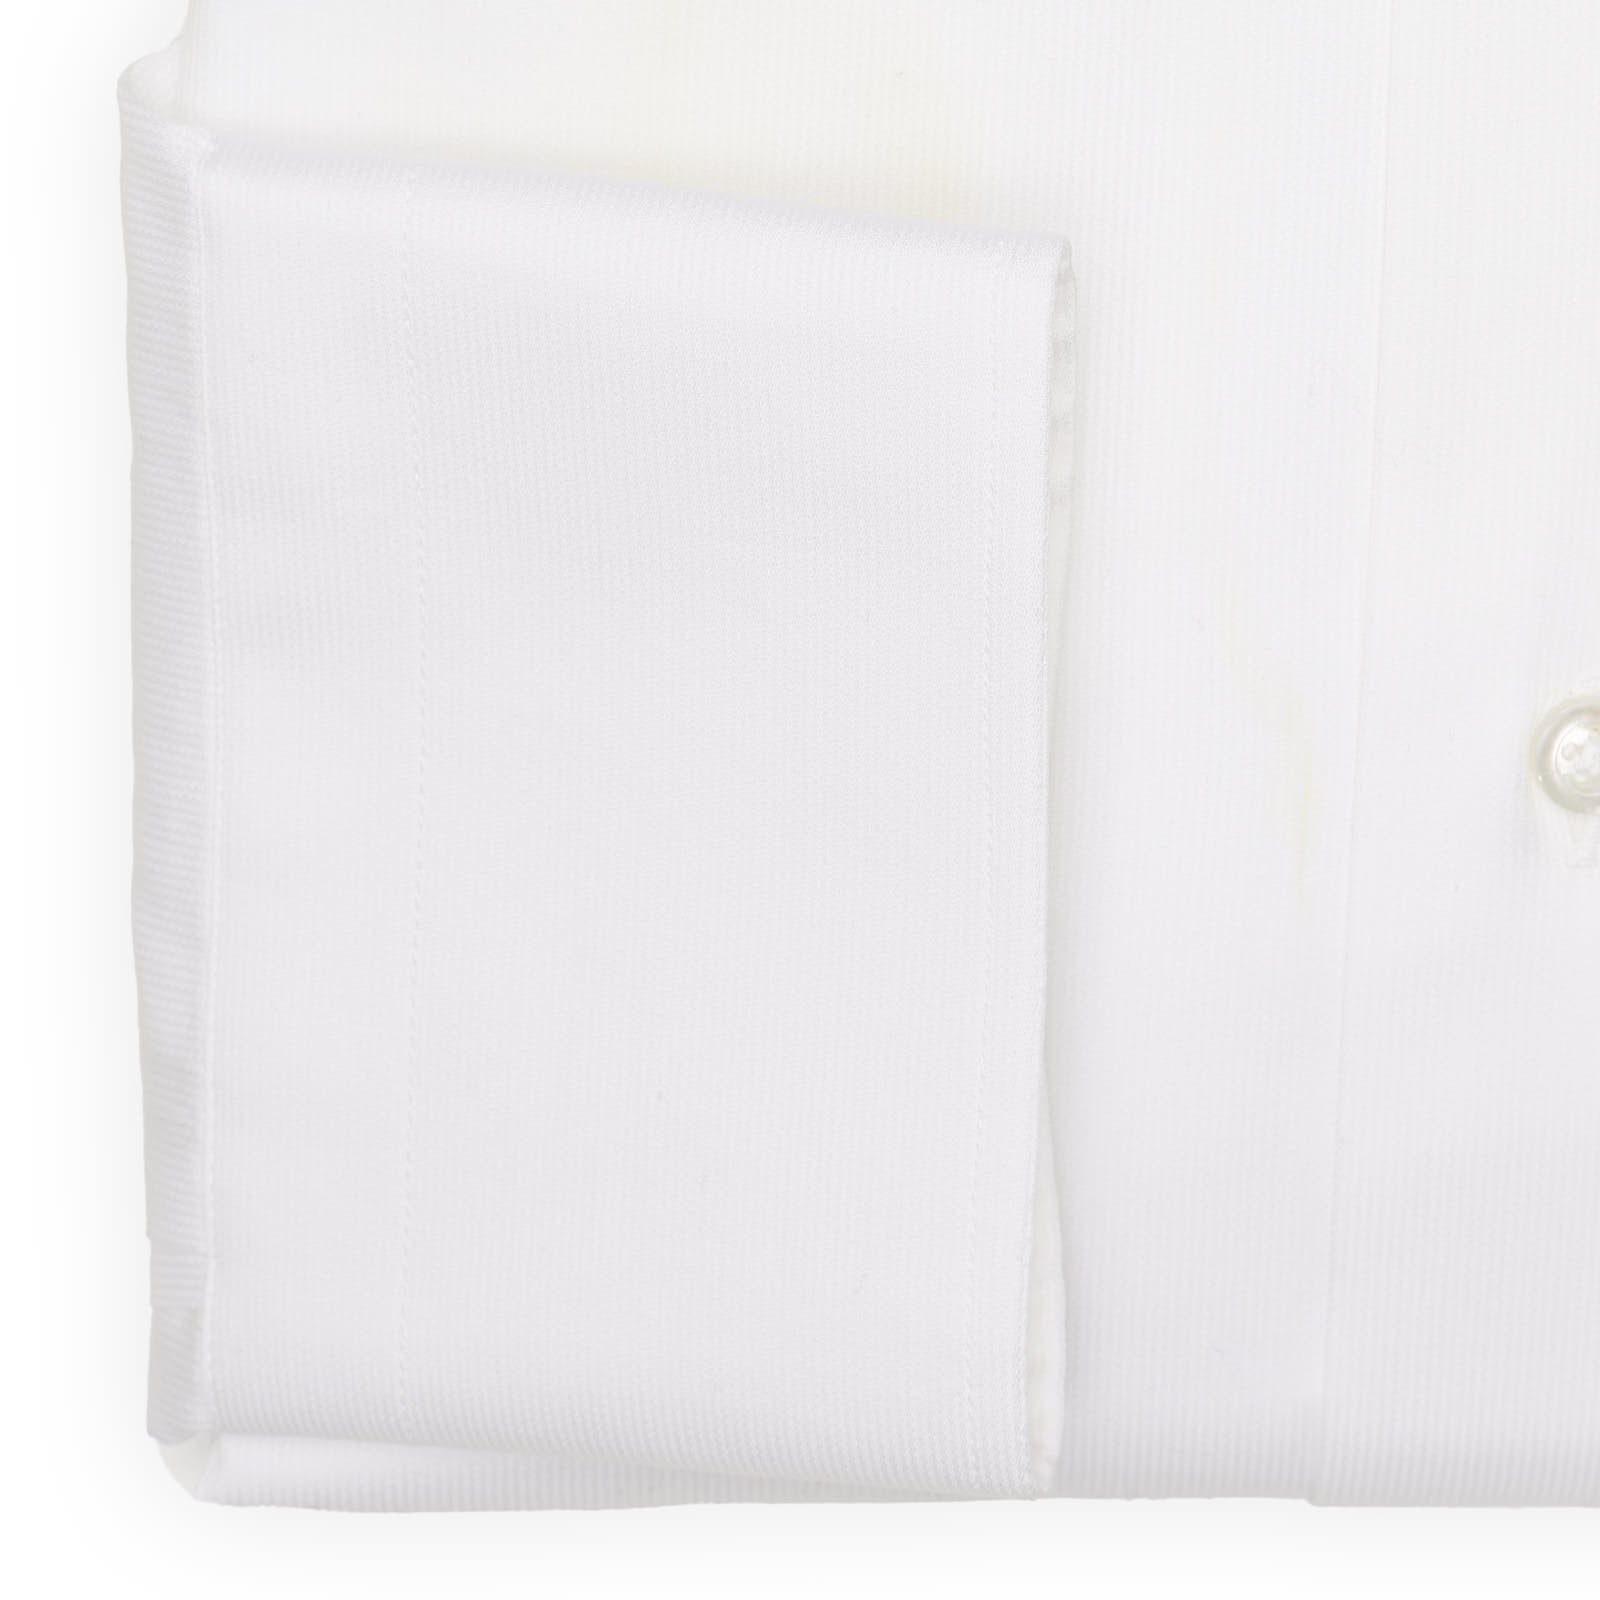 BARBA Napoli Handmade White Cotton Dress Shirt EU 44 NEW US 17.5 Club Collar